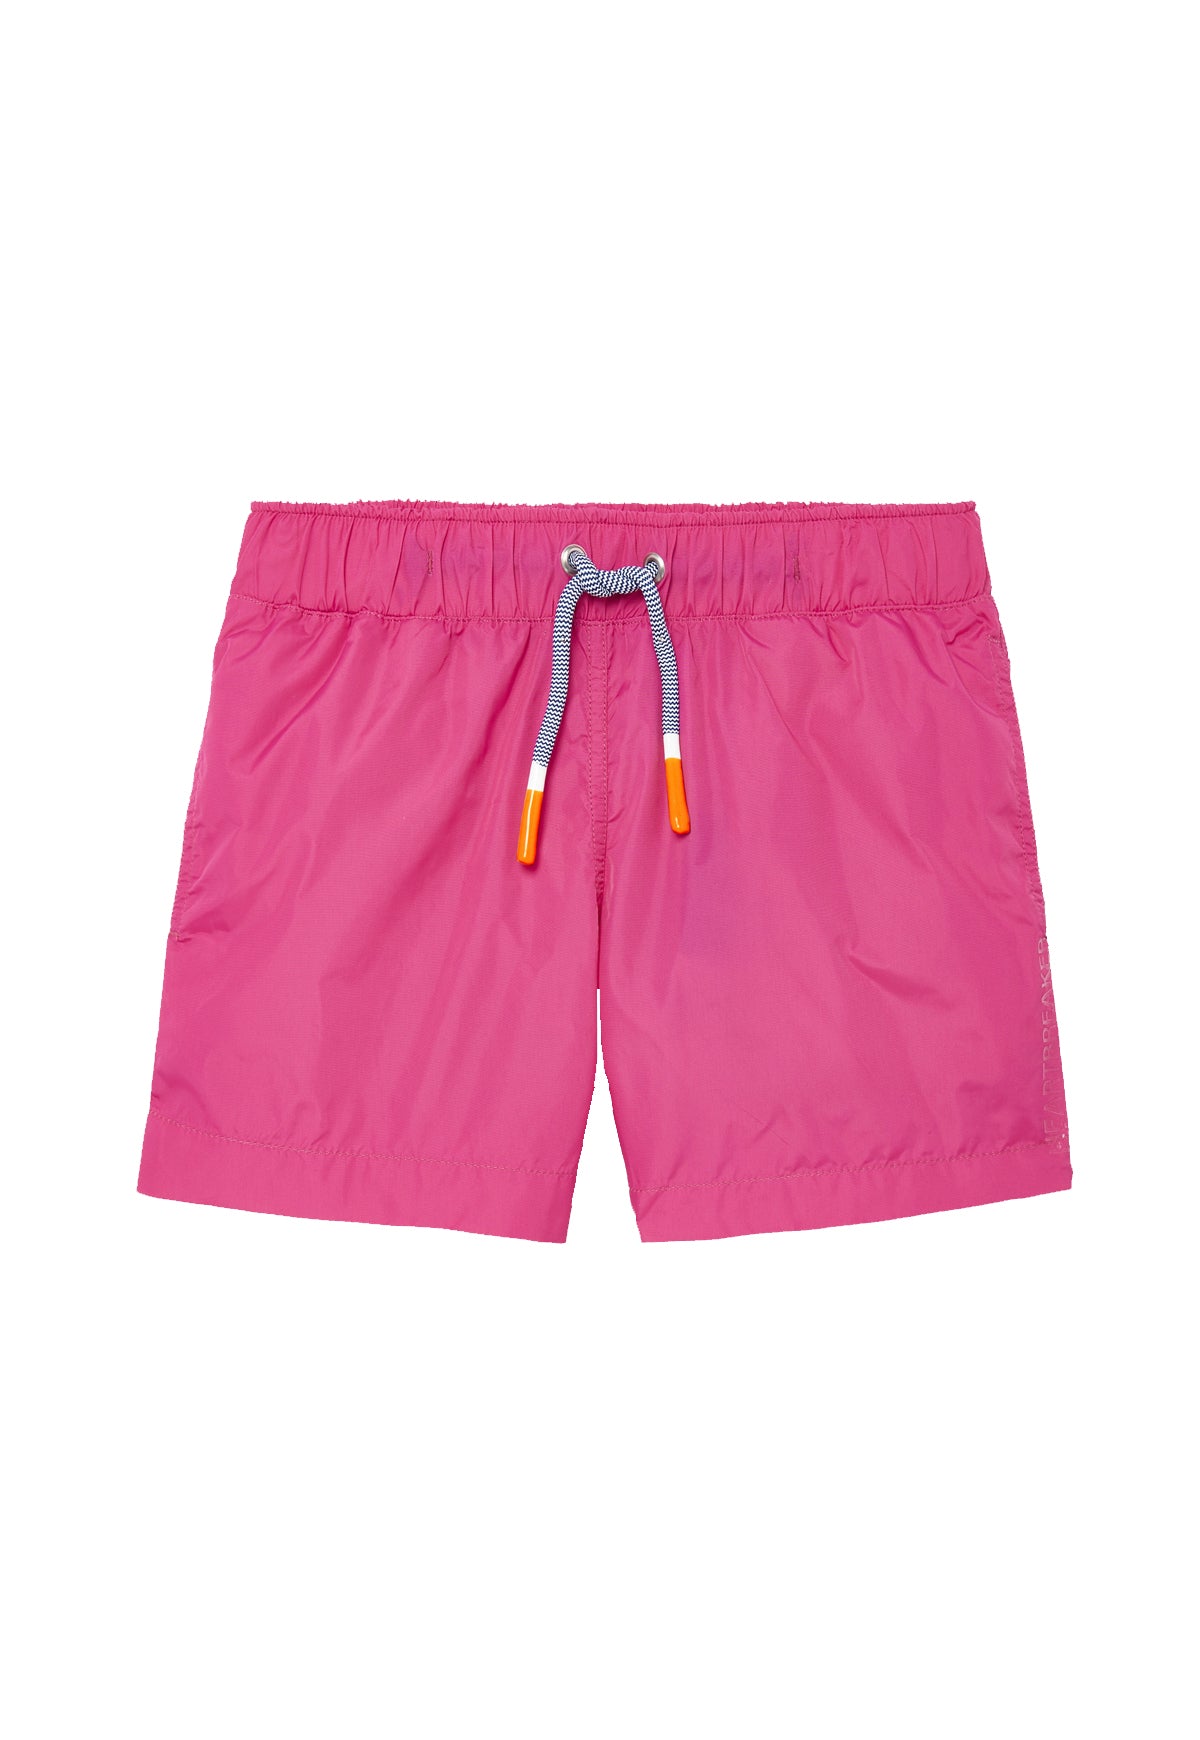 Boy swimming trunks, pink